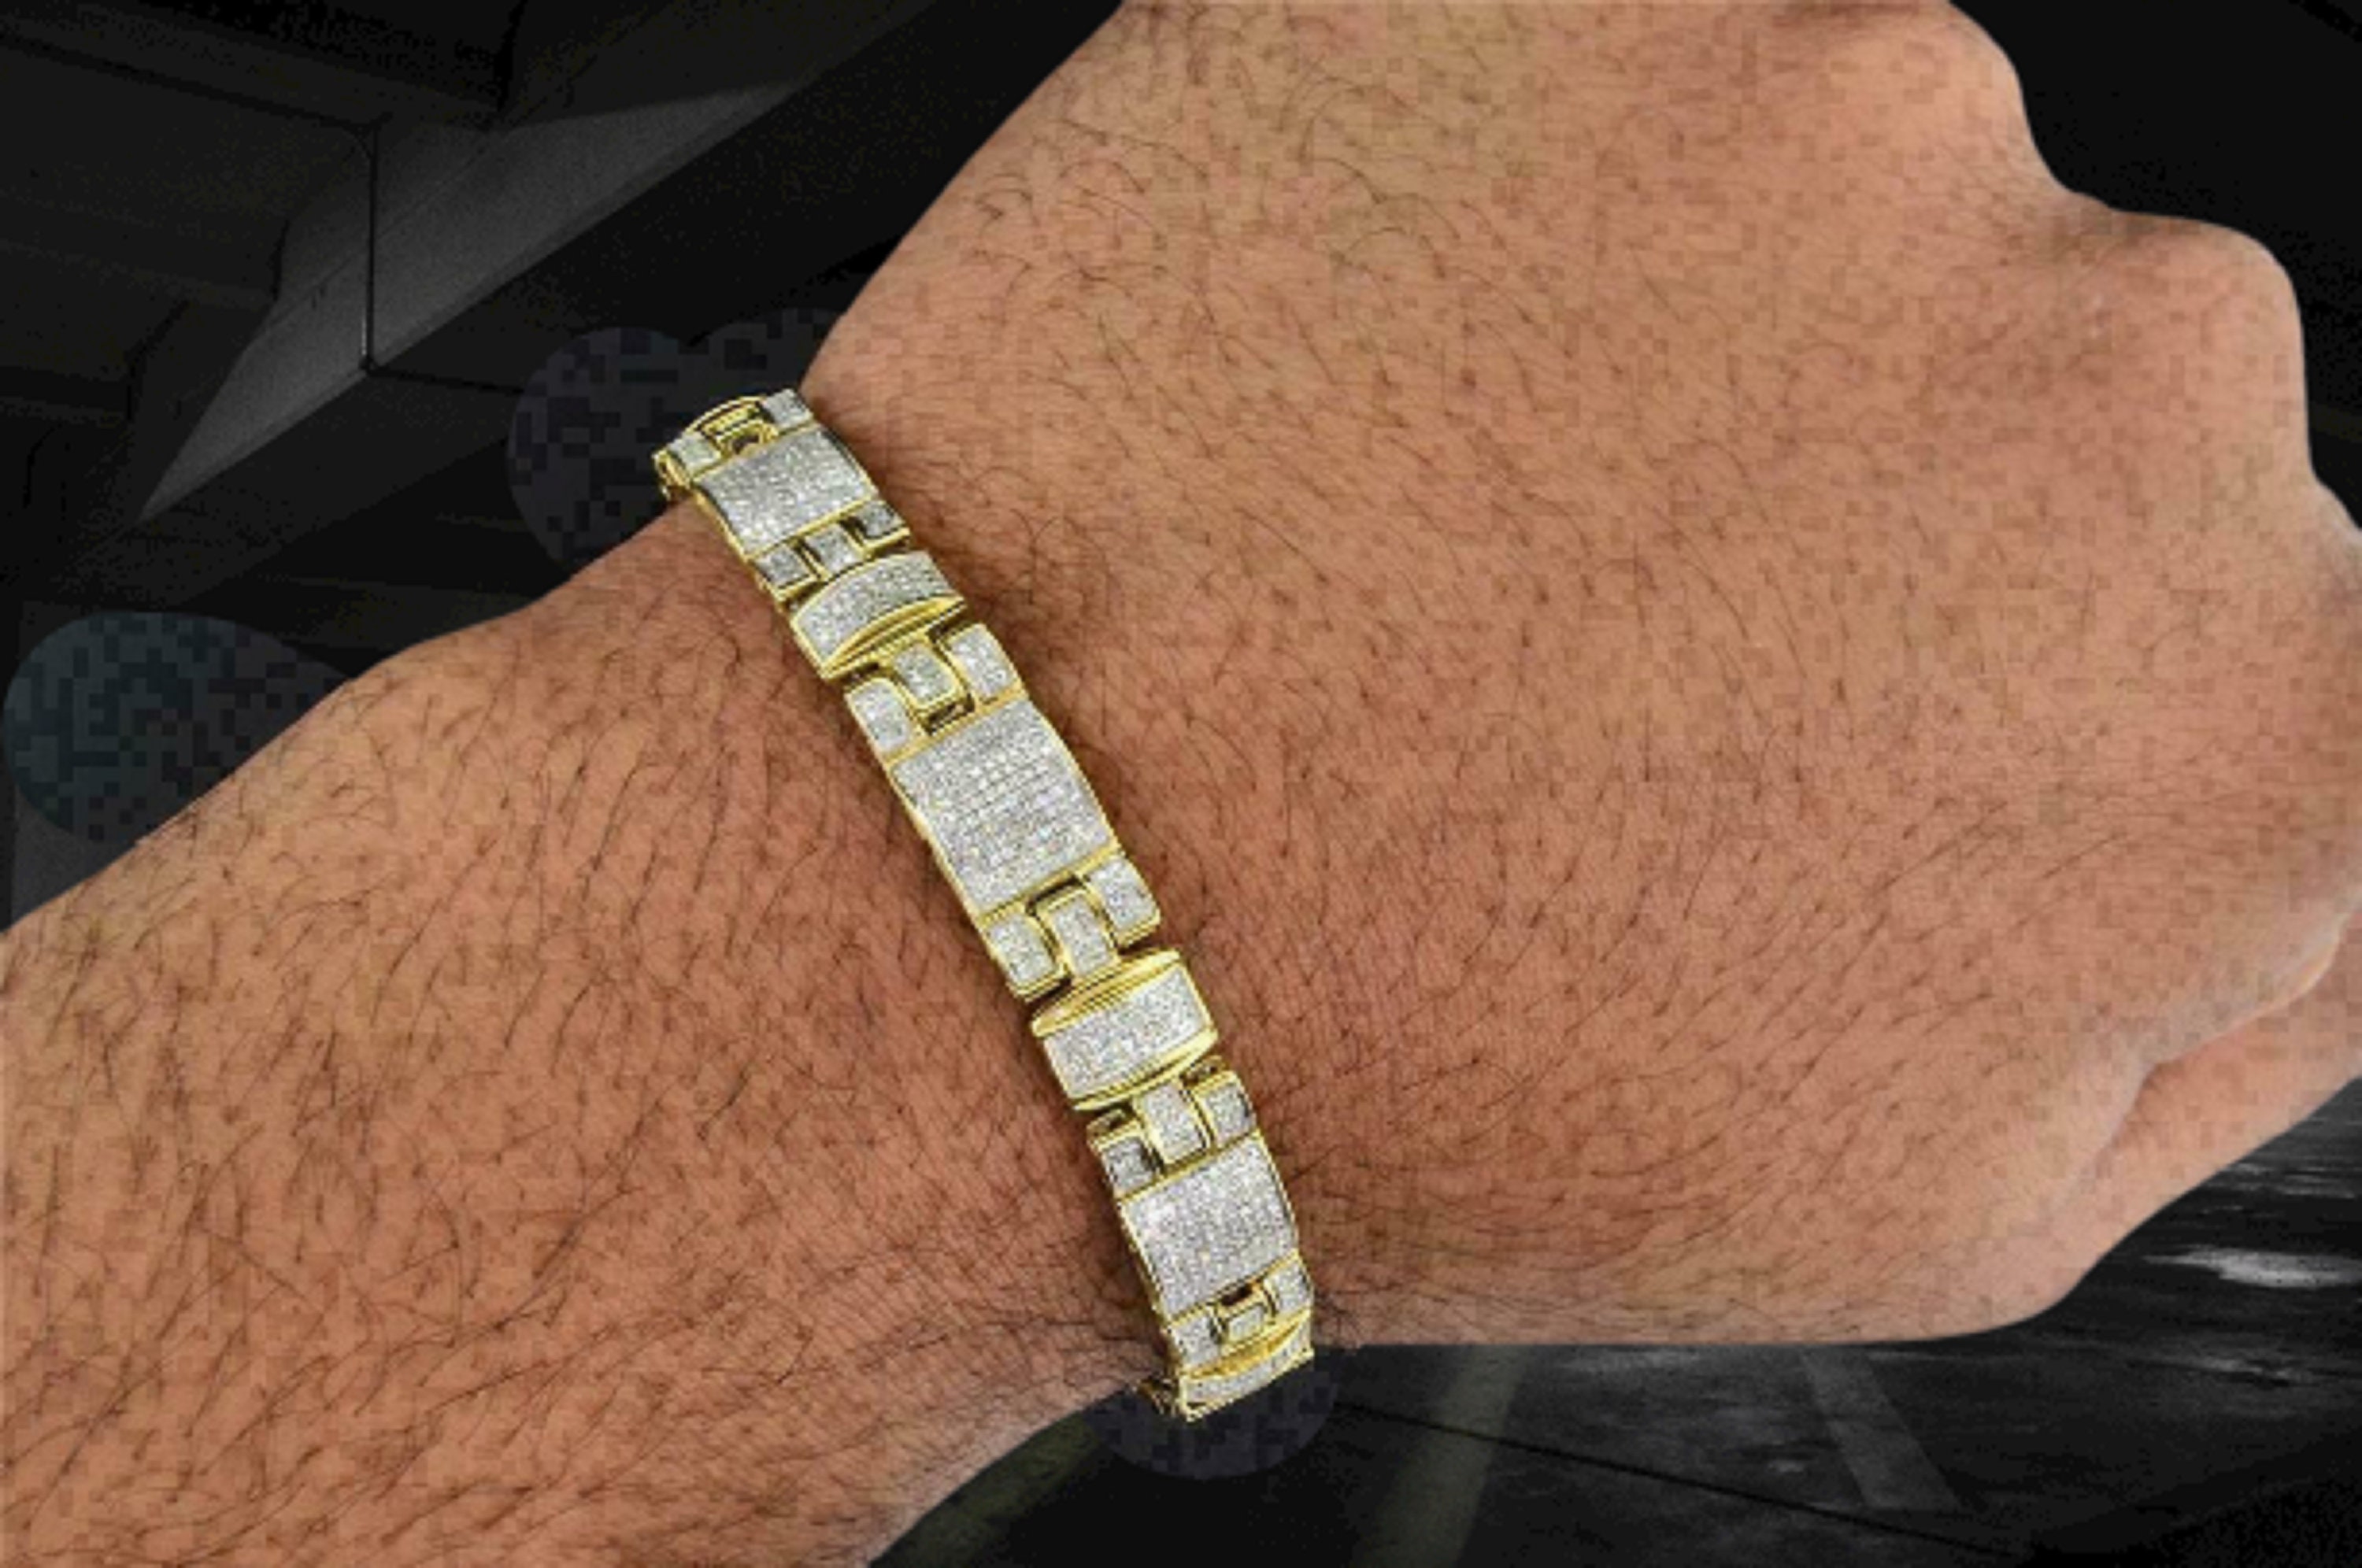 Swank. Stunning Golden ID Bracelet for Men With Diamond Cut 